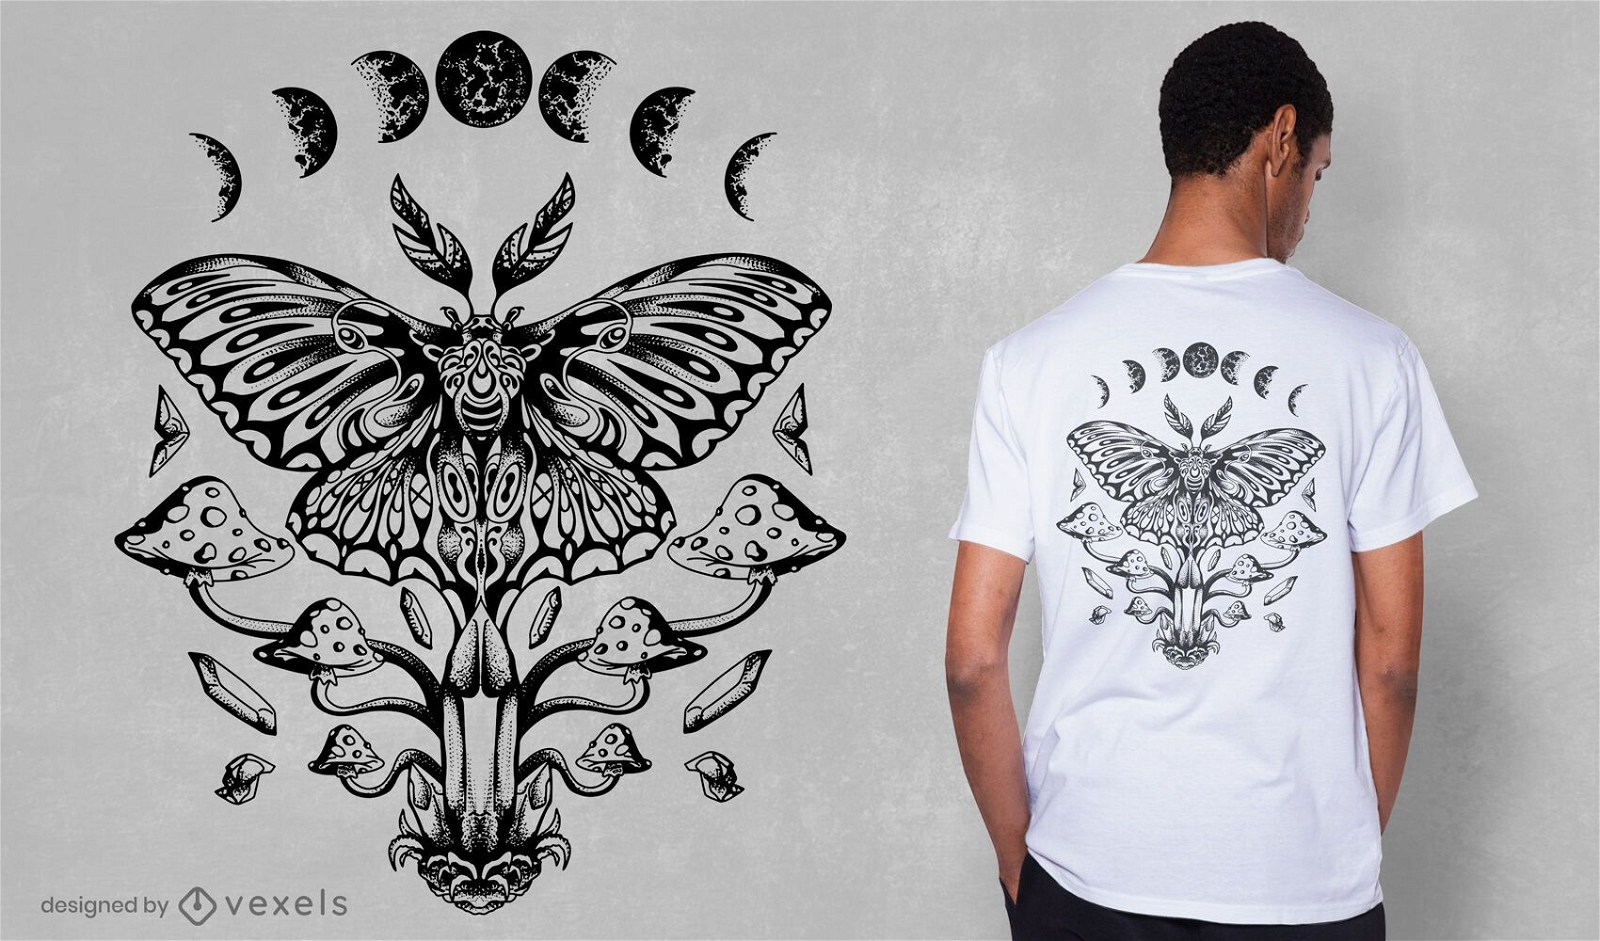 Luna Motte T-Shirt Design